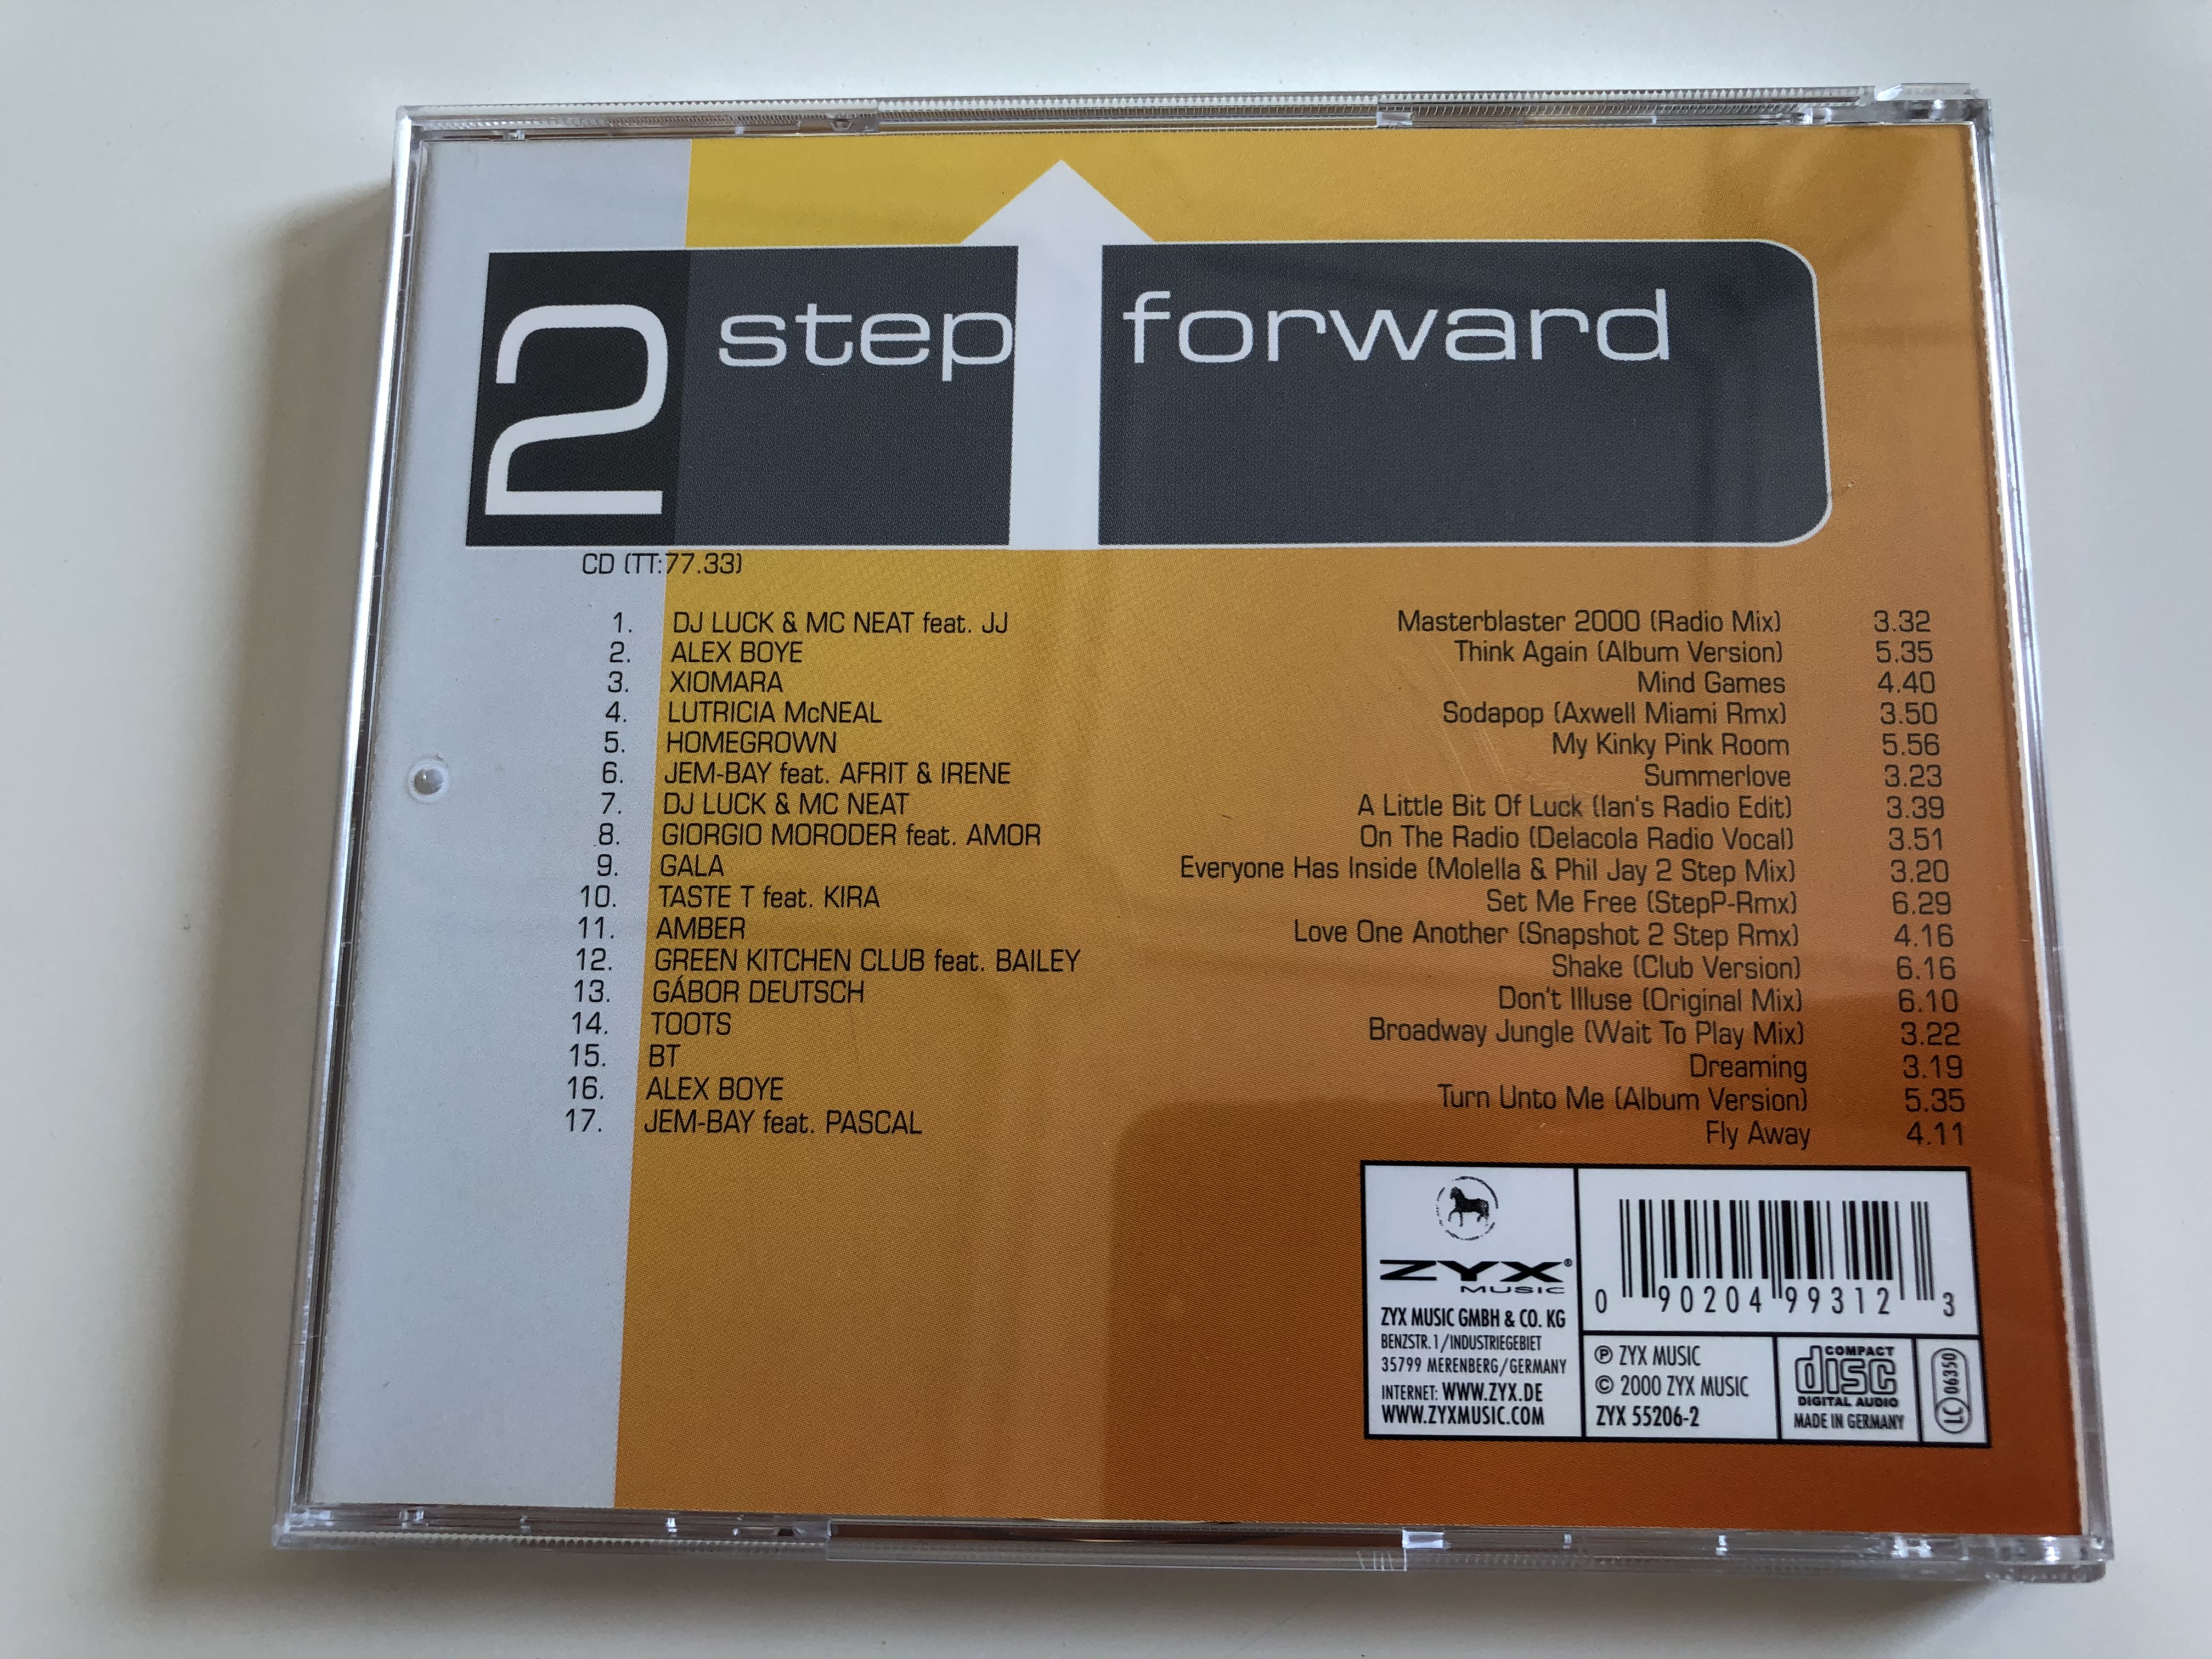 2-step-forward-featuring-amber-homegrown-dj-luck-mc-neat-feat.-jj-xiomara-toots...-and-more-zyx-music-audio-cd-2000-zyx-55206-2-3-.jpg